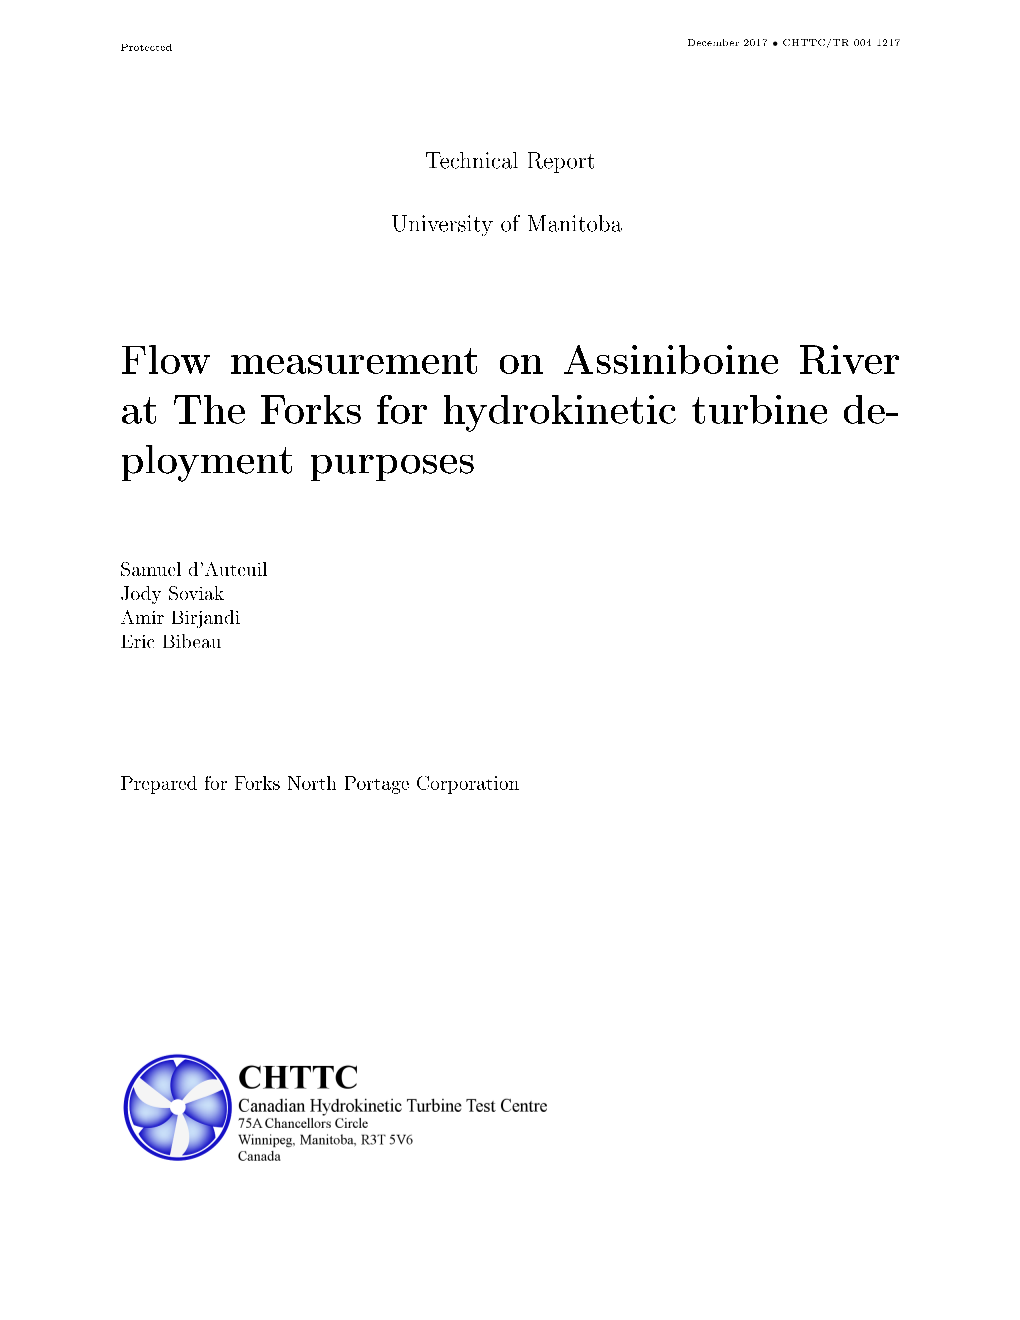 Flow Measurement on Assiniboine River at the Forks for Hydrokinetic Turbine De- Ployment Purposes